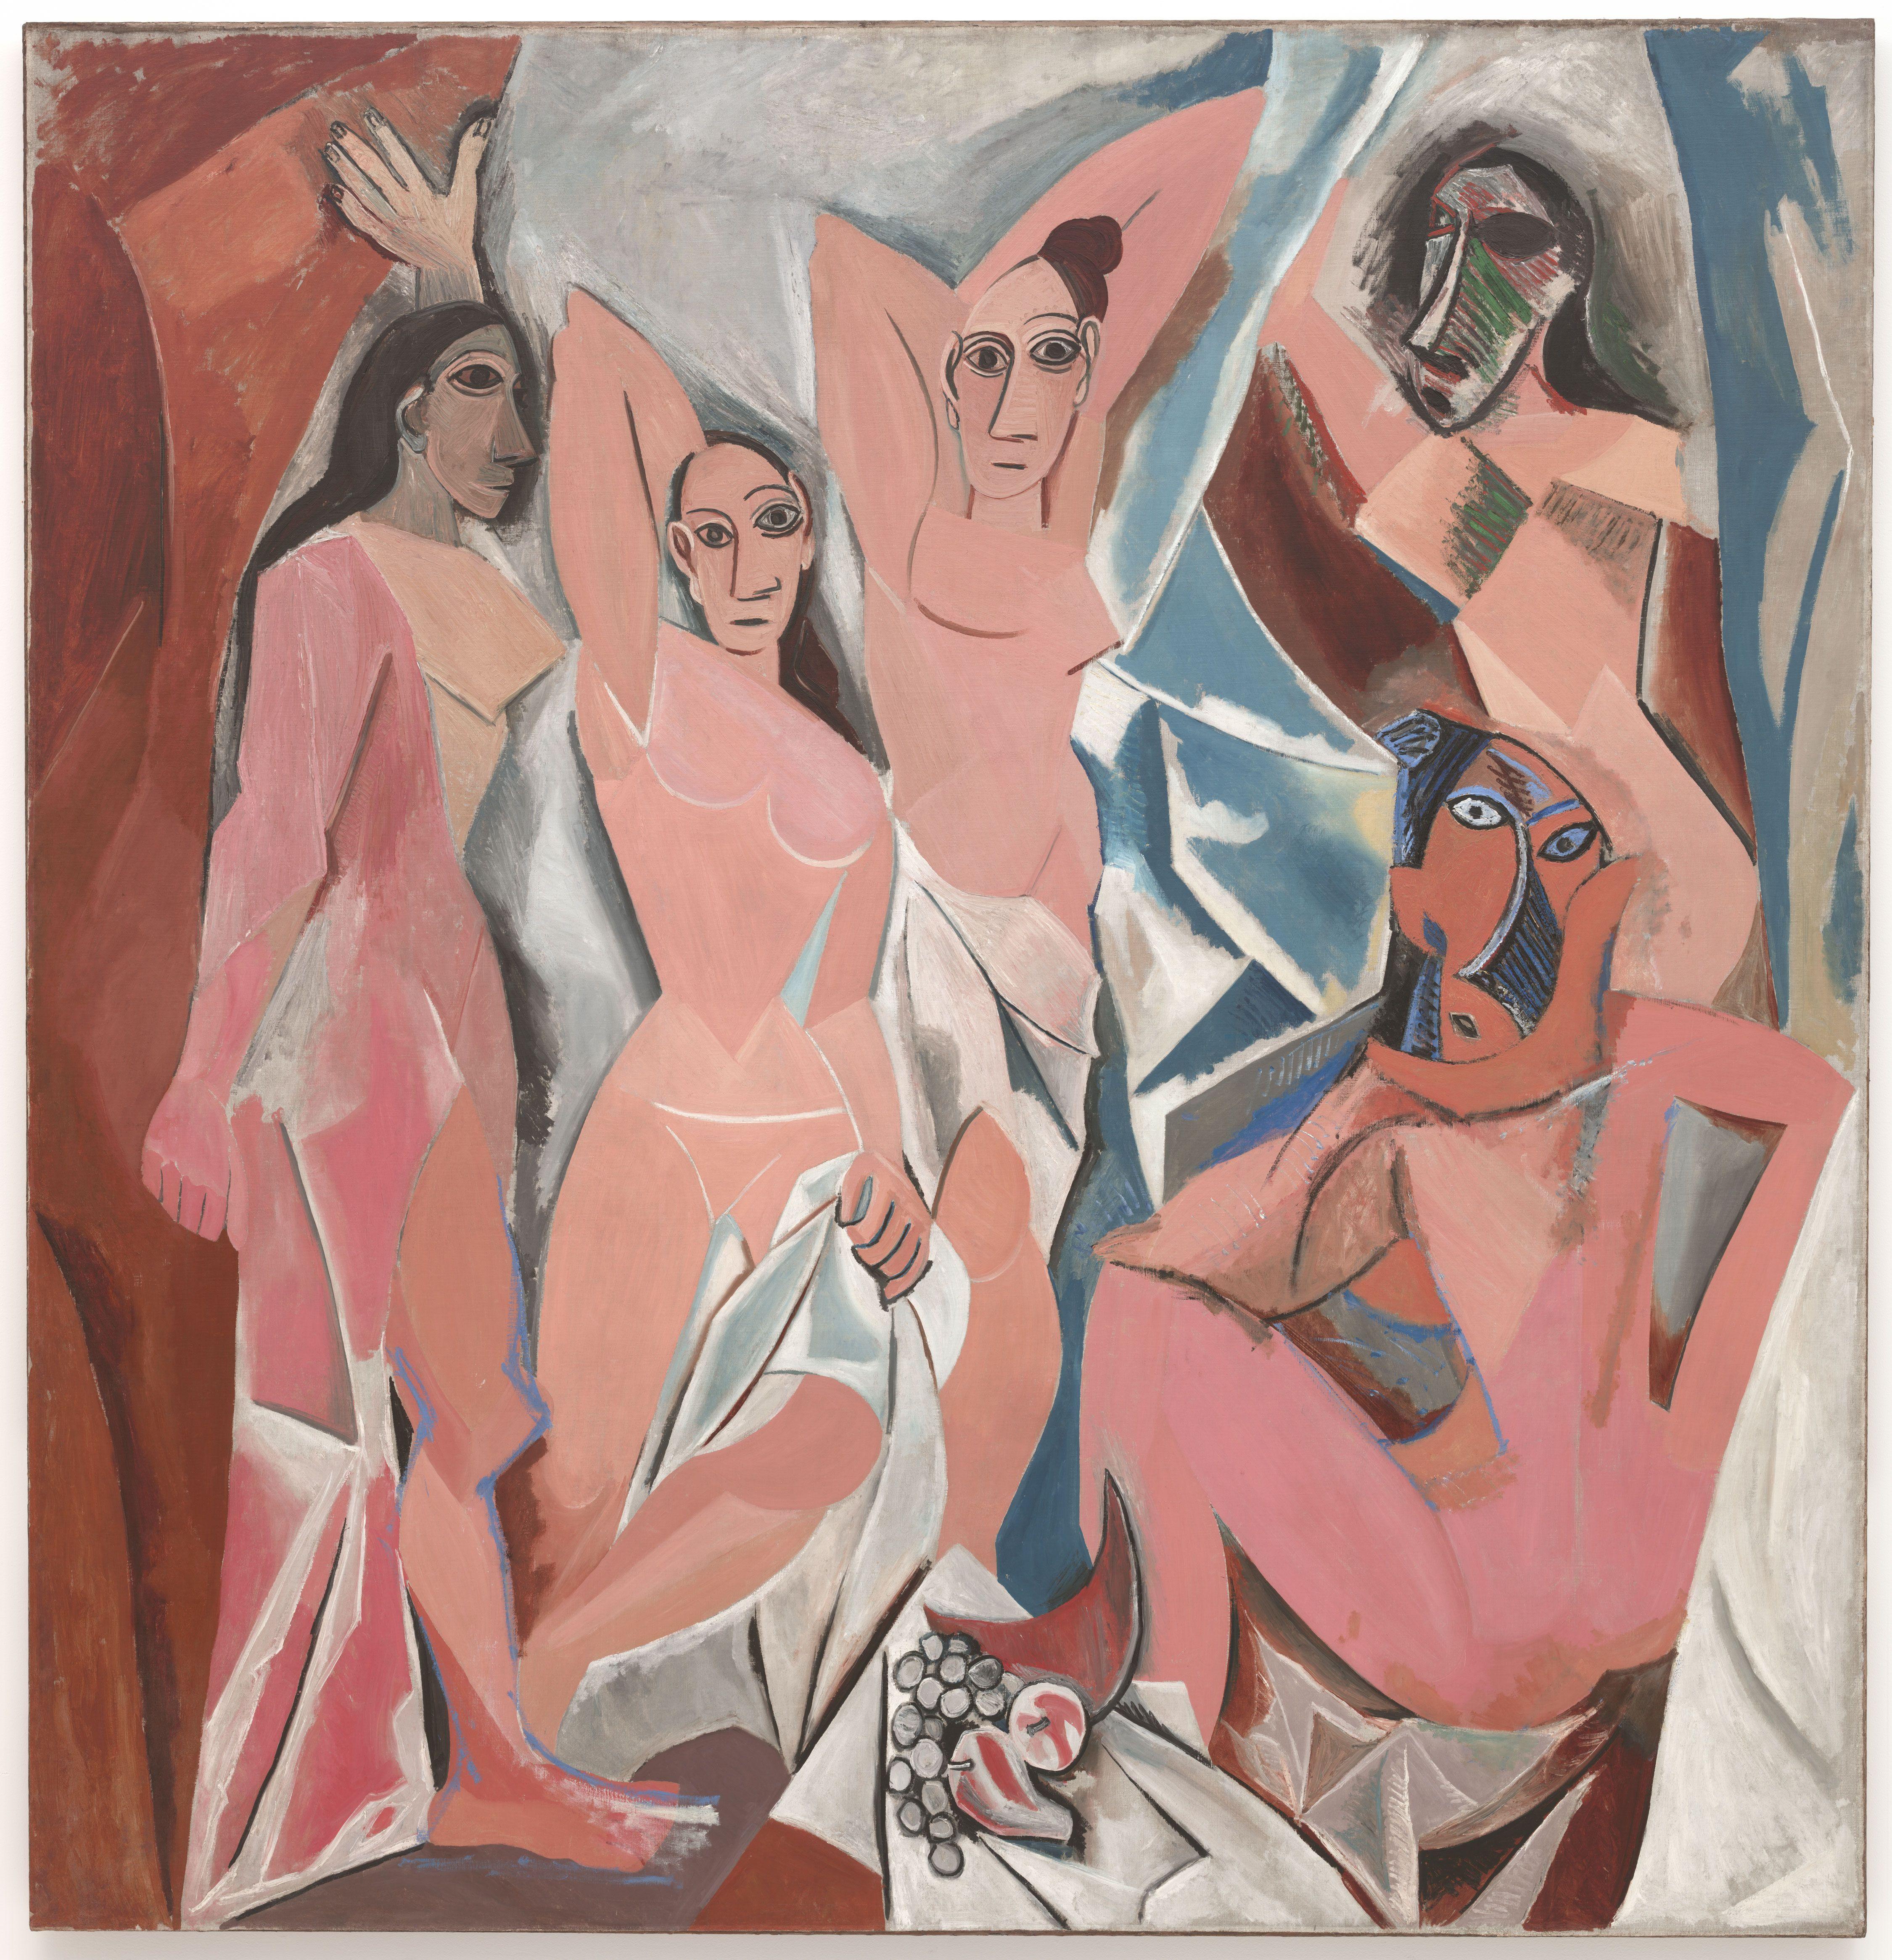 Pablo Picasso | Les demoiselles d’Avignon |1907 | © Museum of Modern Art, New York City